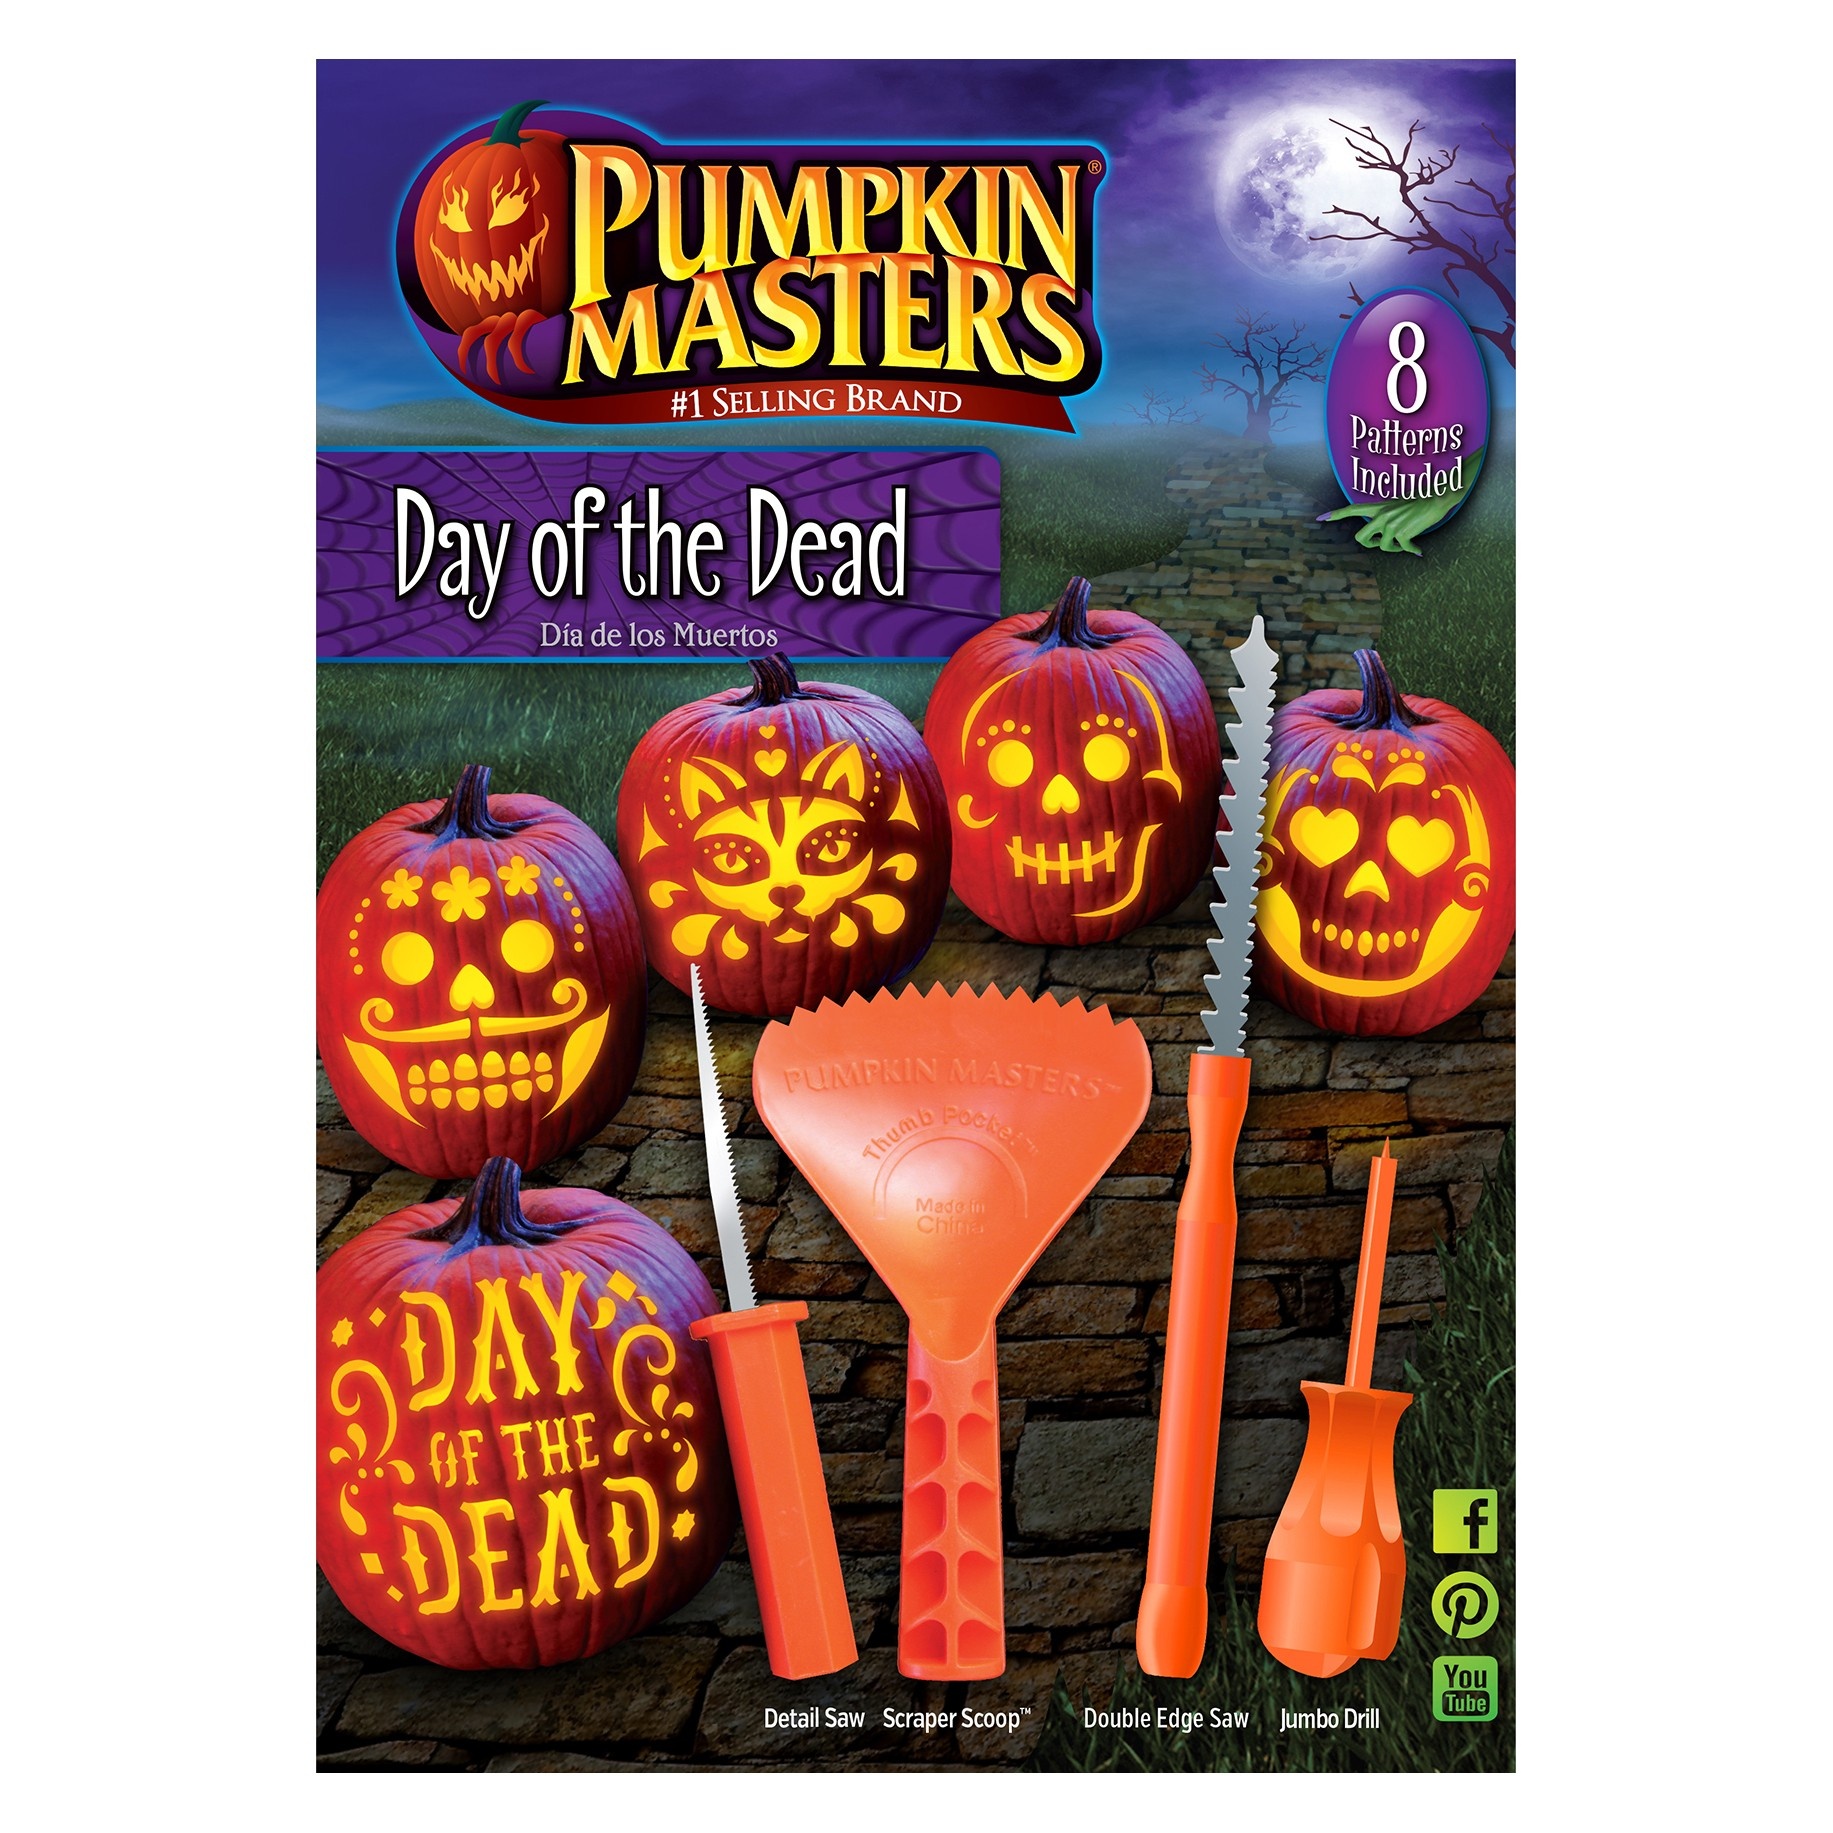 Duarte Sports - #Raiders Halloween pumpkin carving kit $9.99 To